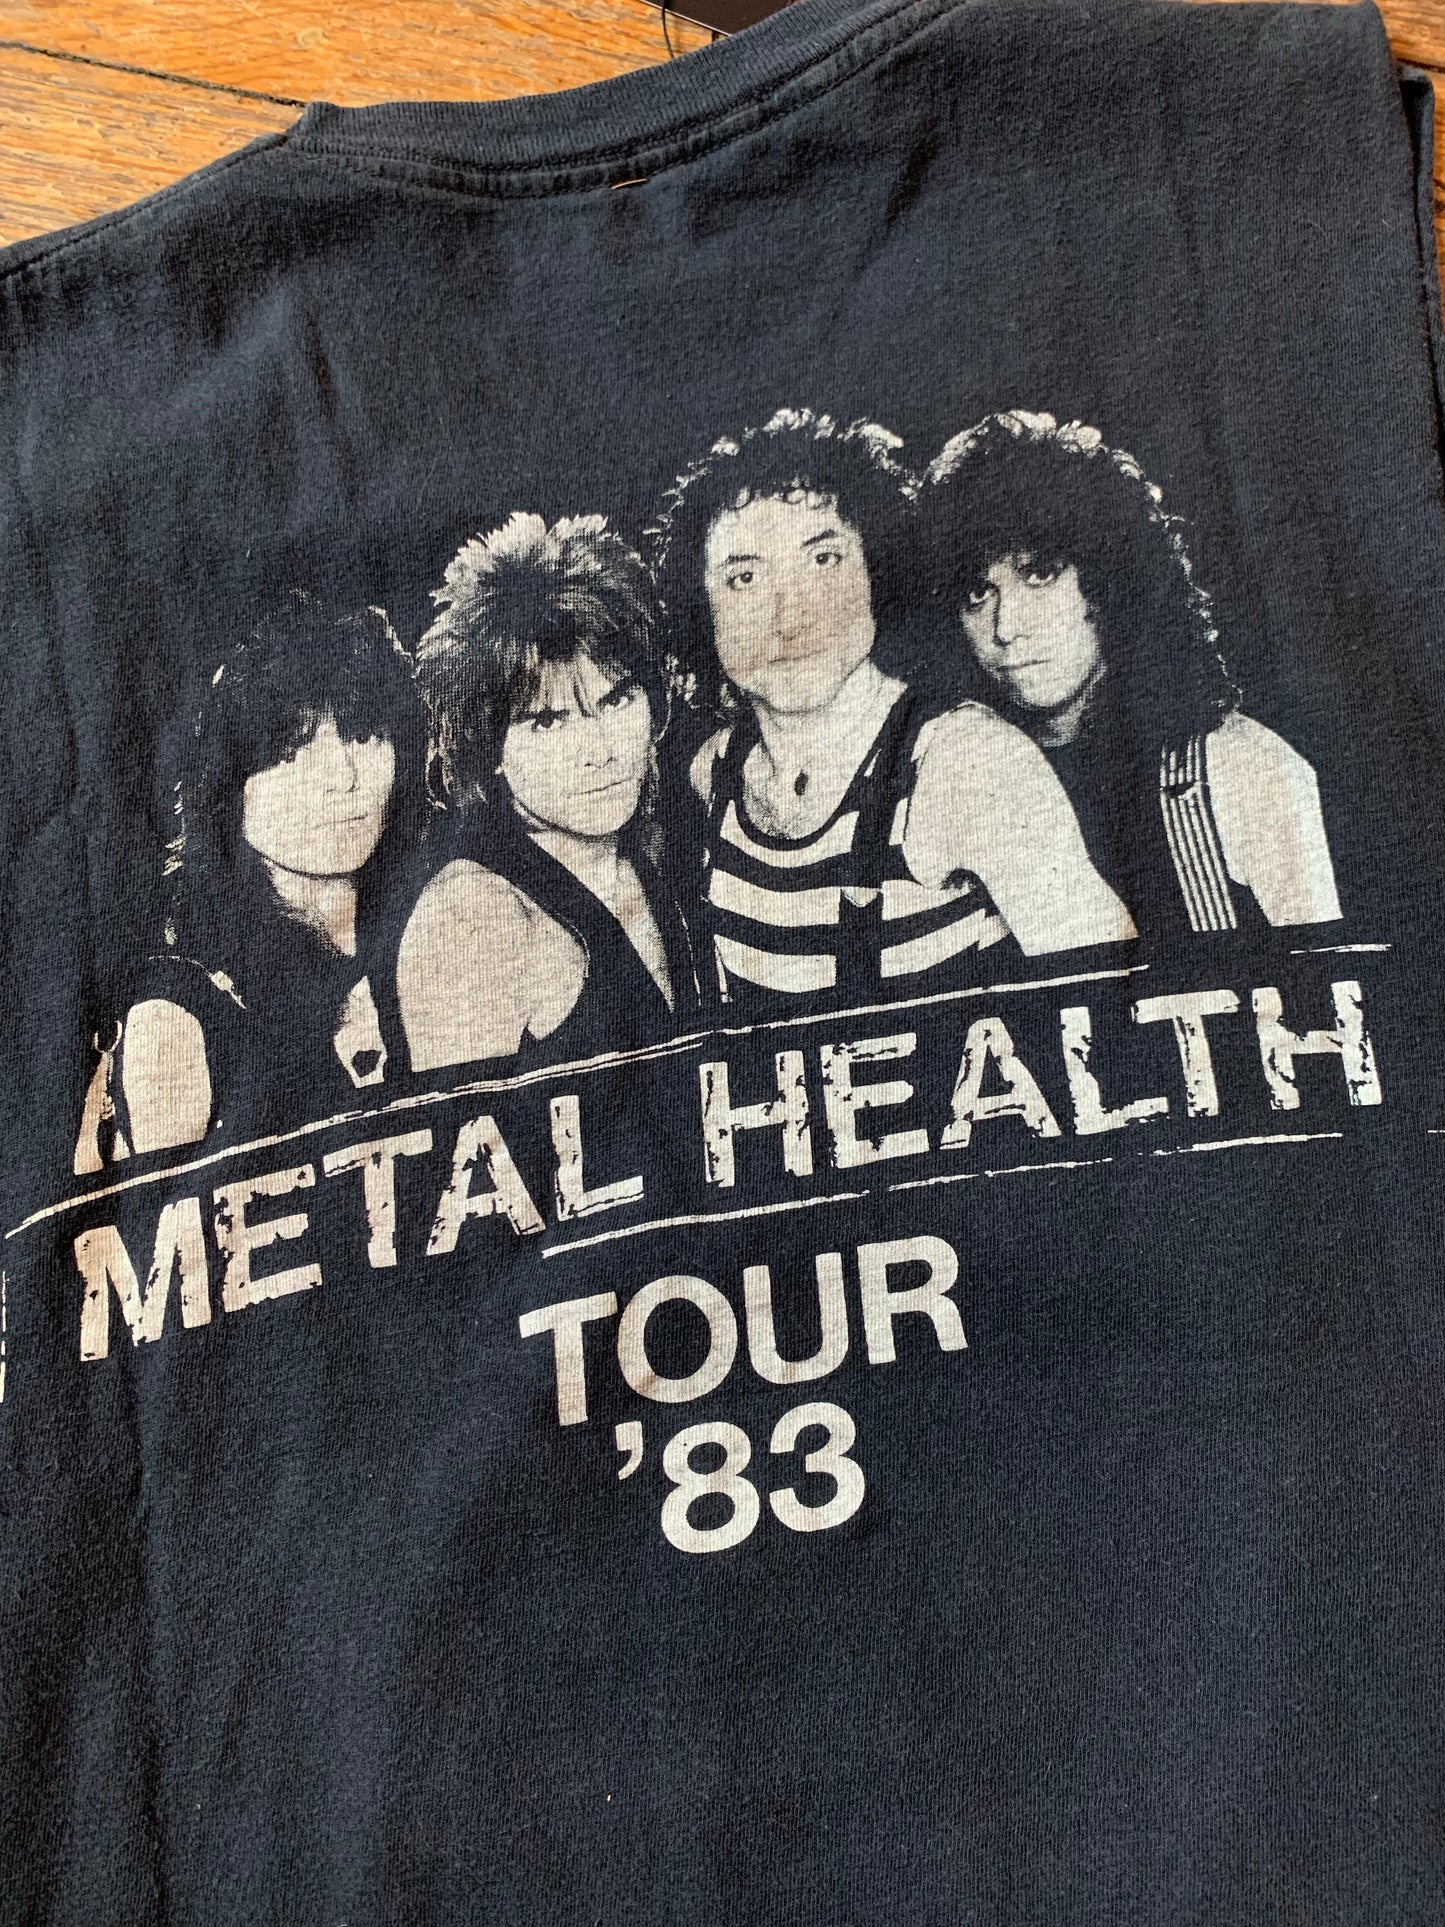 Vintage 1983 Quiet Riot Metal Health Tour Sleeveless T-Shirt